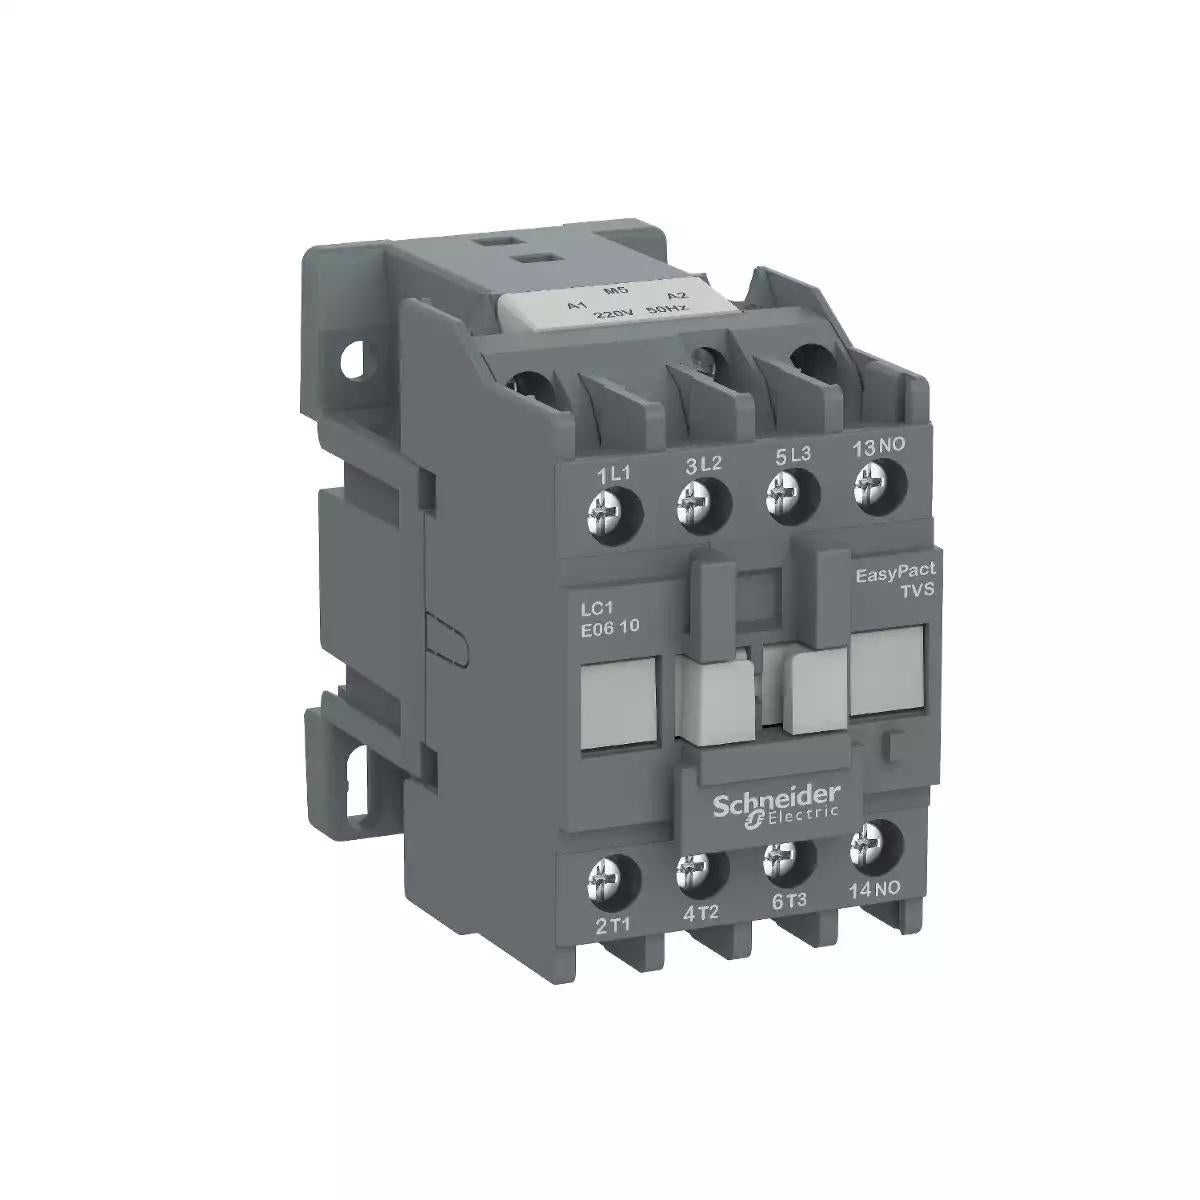 Contactor,EasyPact TVS,3P(3NO),AC-3,<=440V,9A,24V AC coil,50/60Hz,1NO auxiliary contact